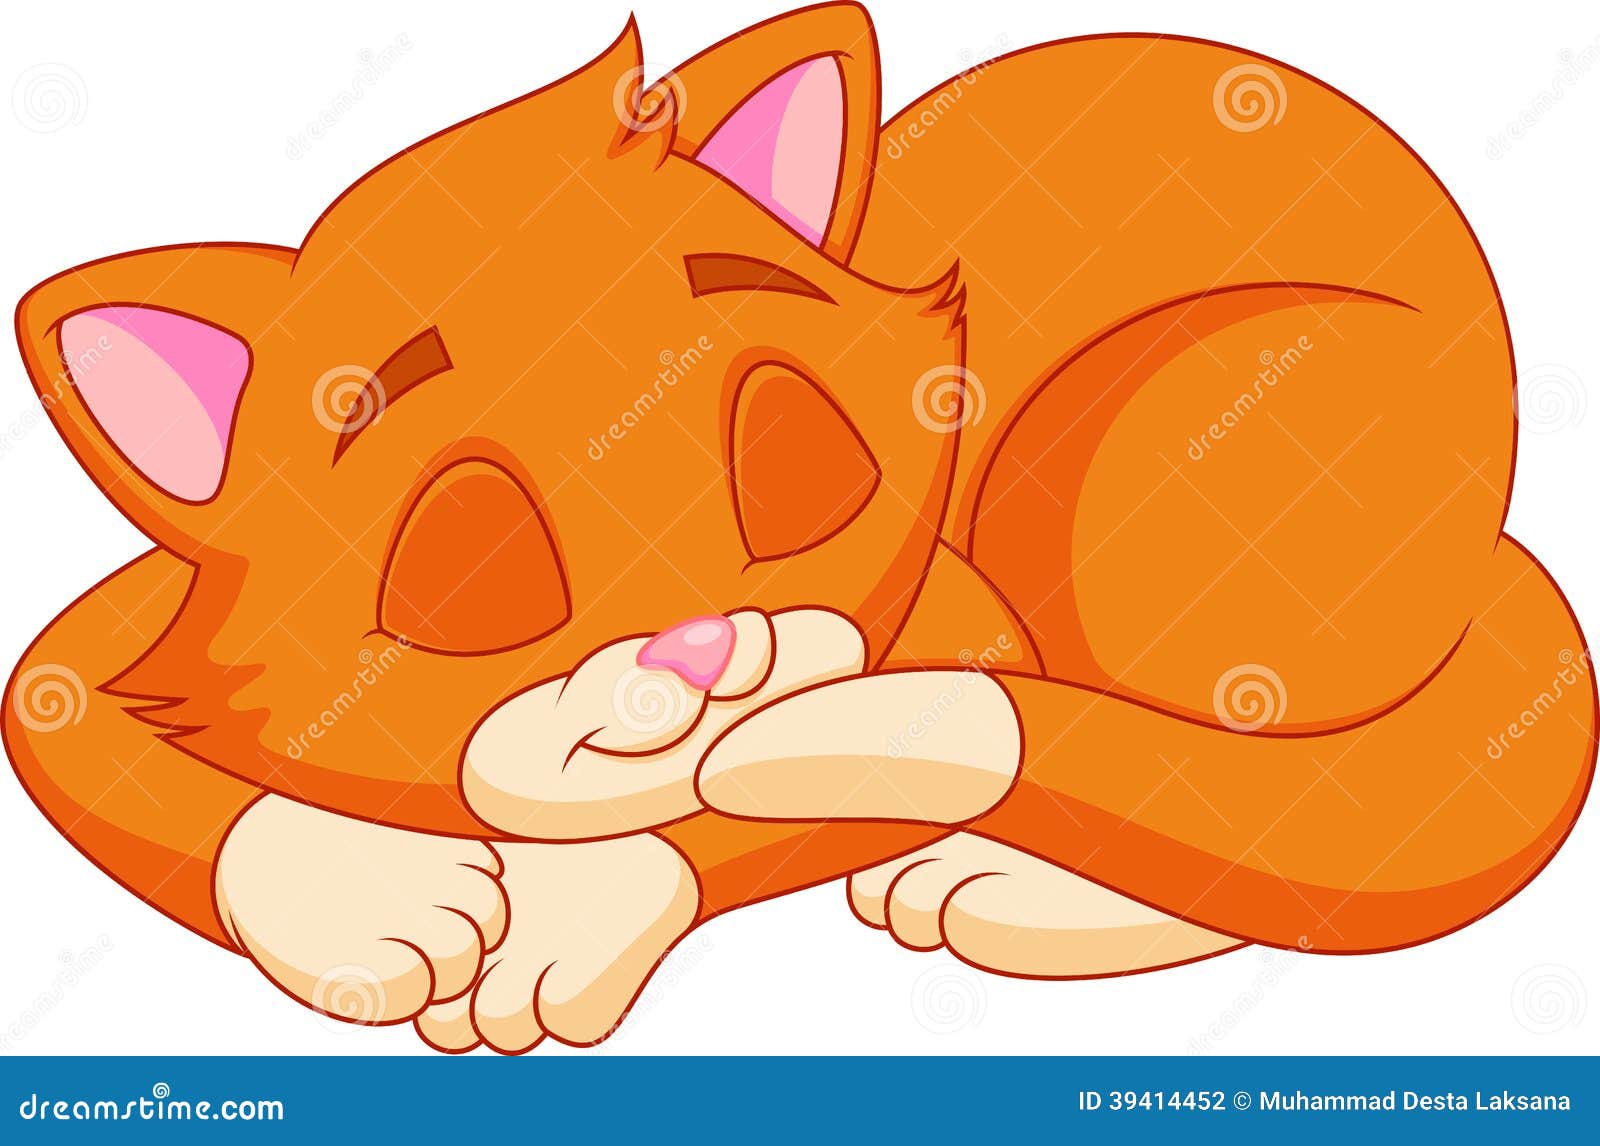 Funny cat cartoon stock illustration. Illustration of beautiful - 39414452